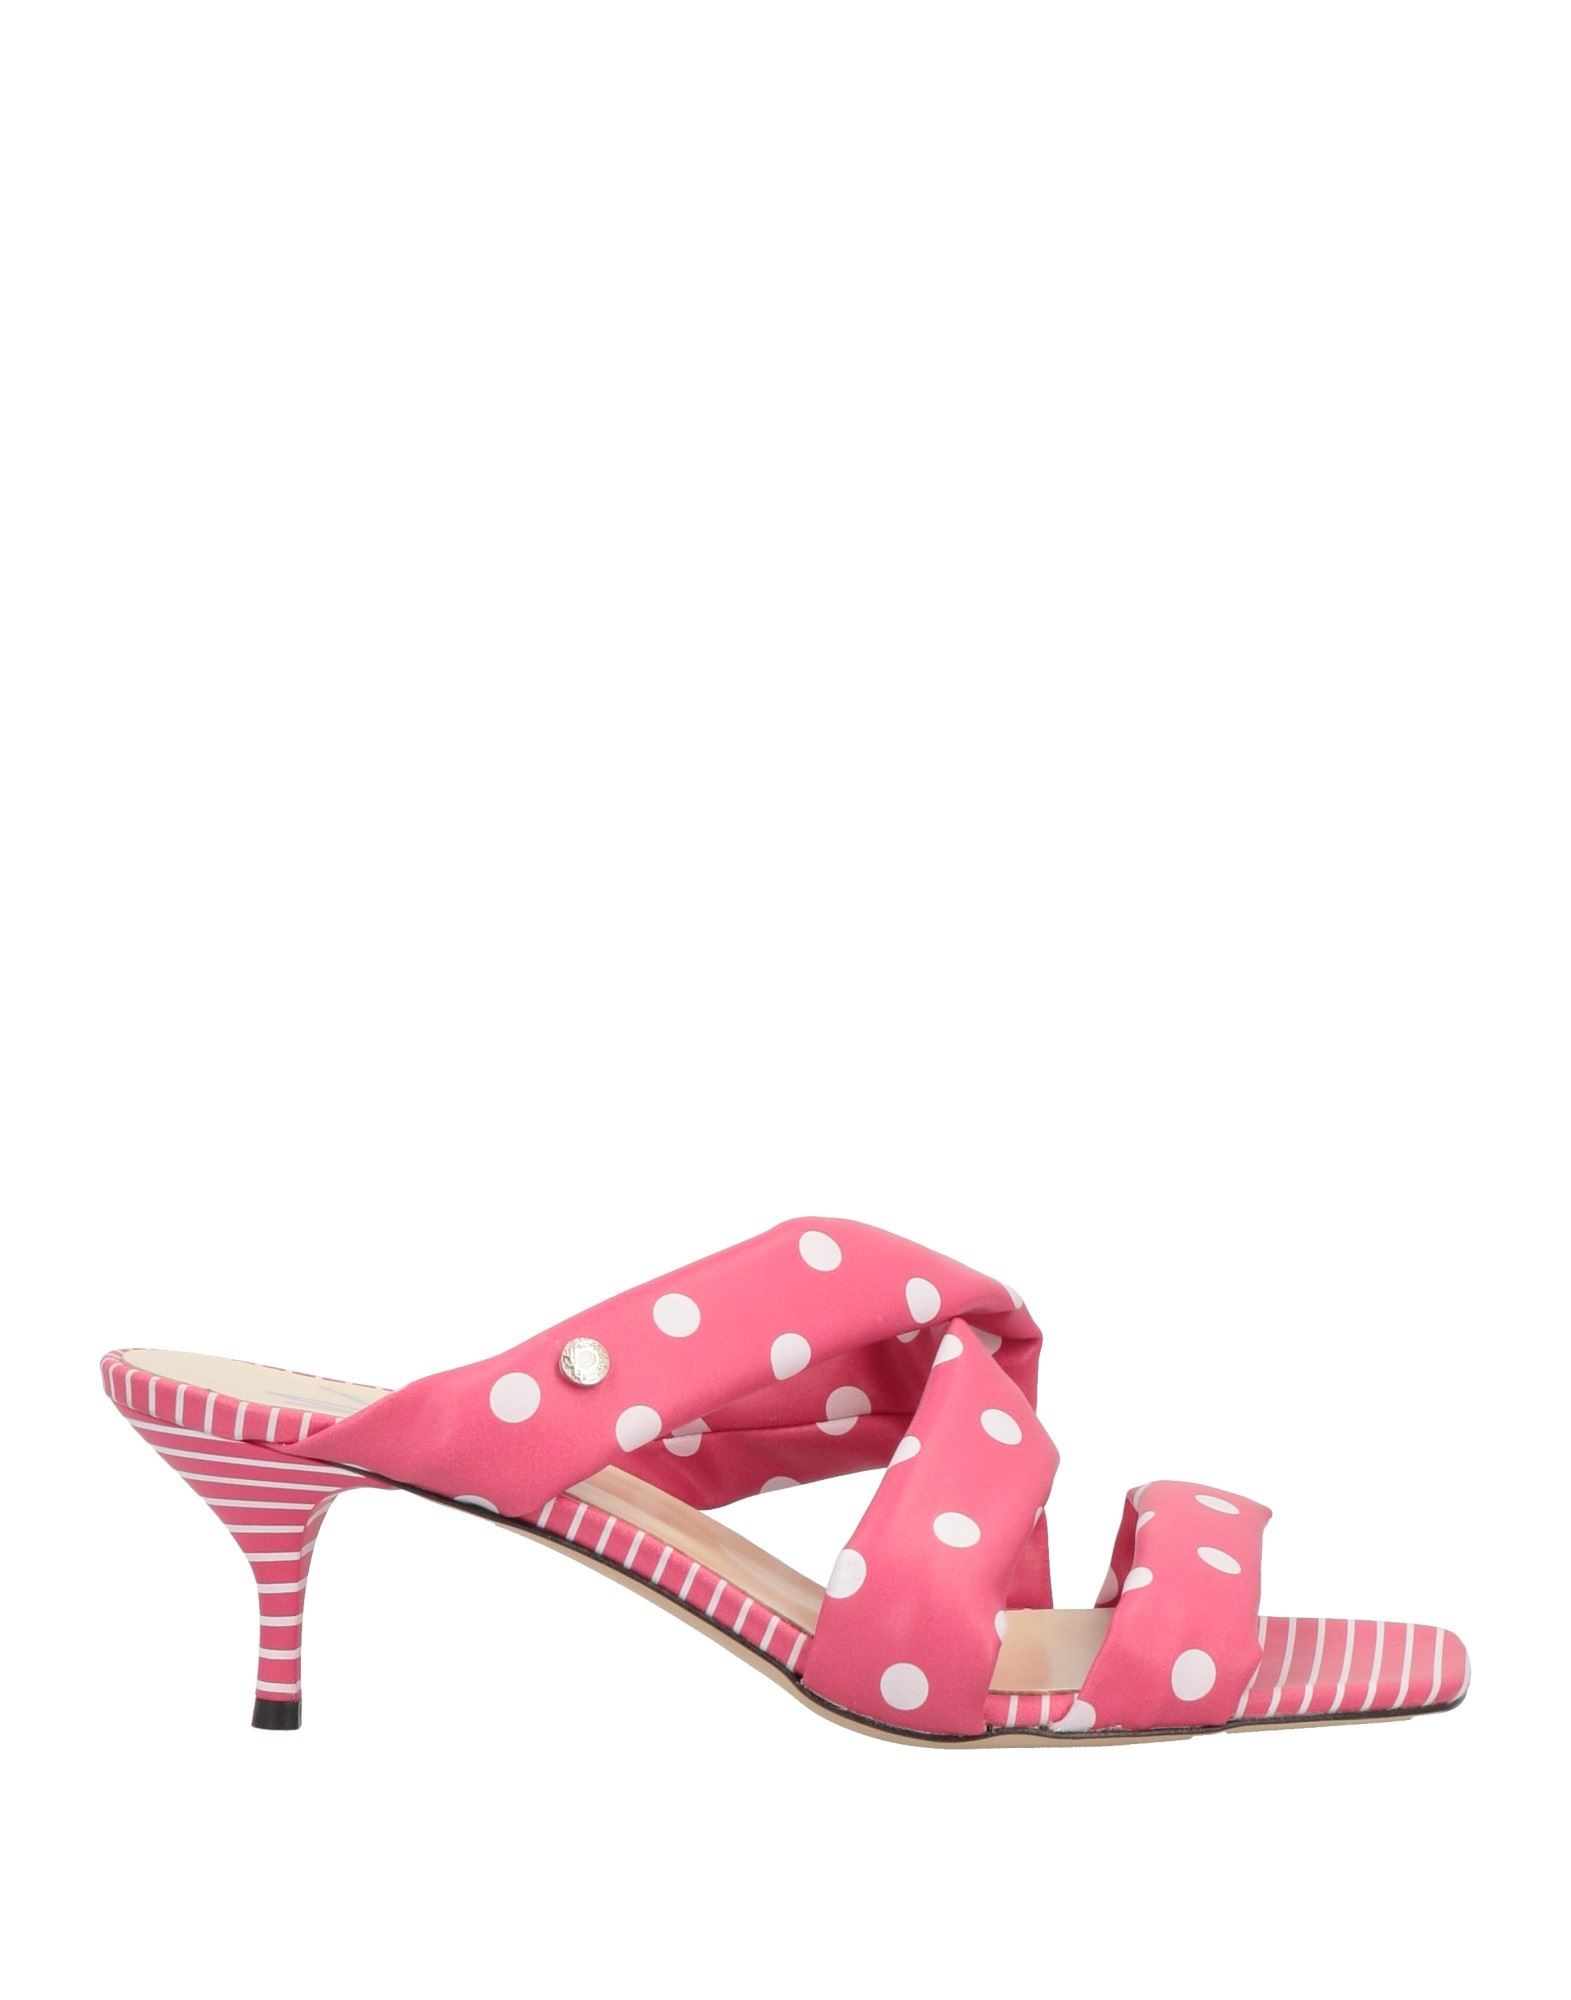 Manila Grace Sandals In Pink